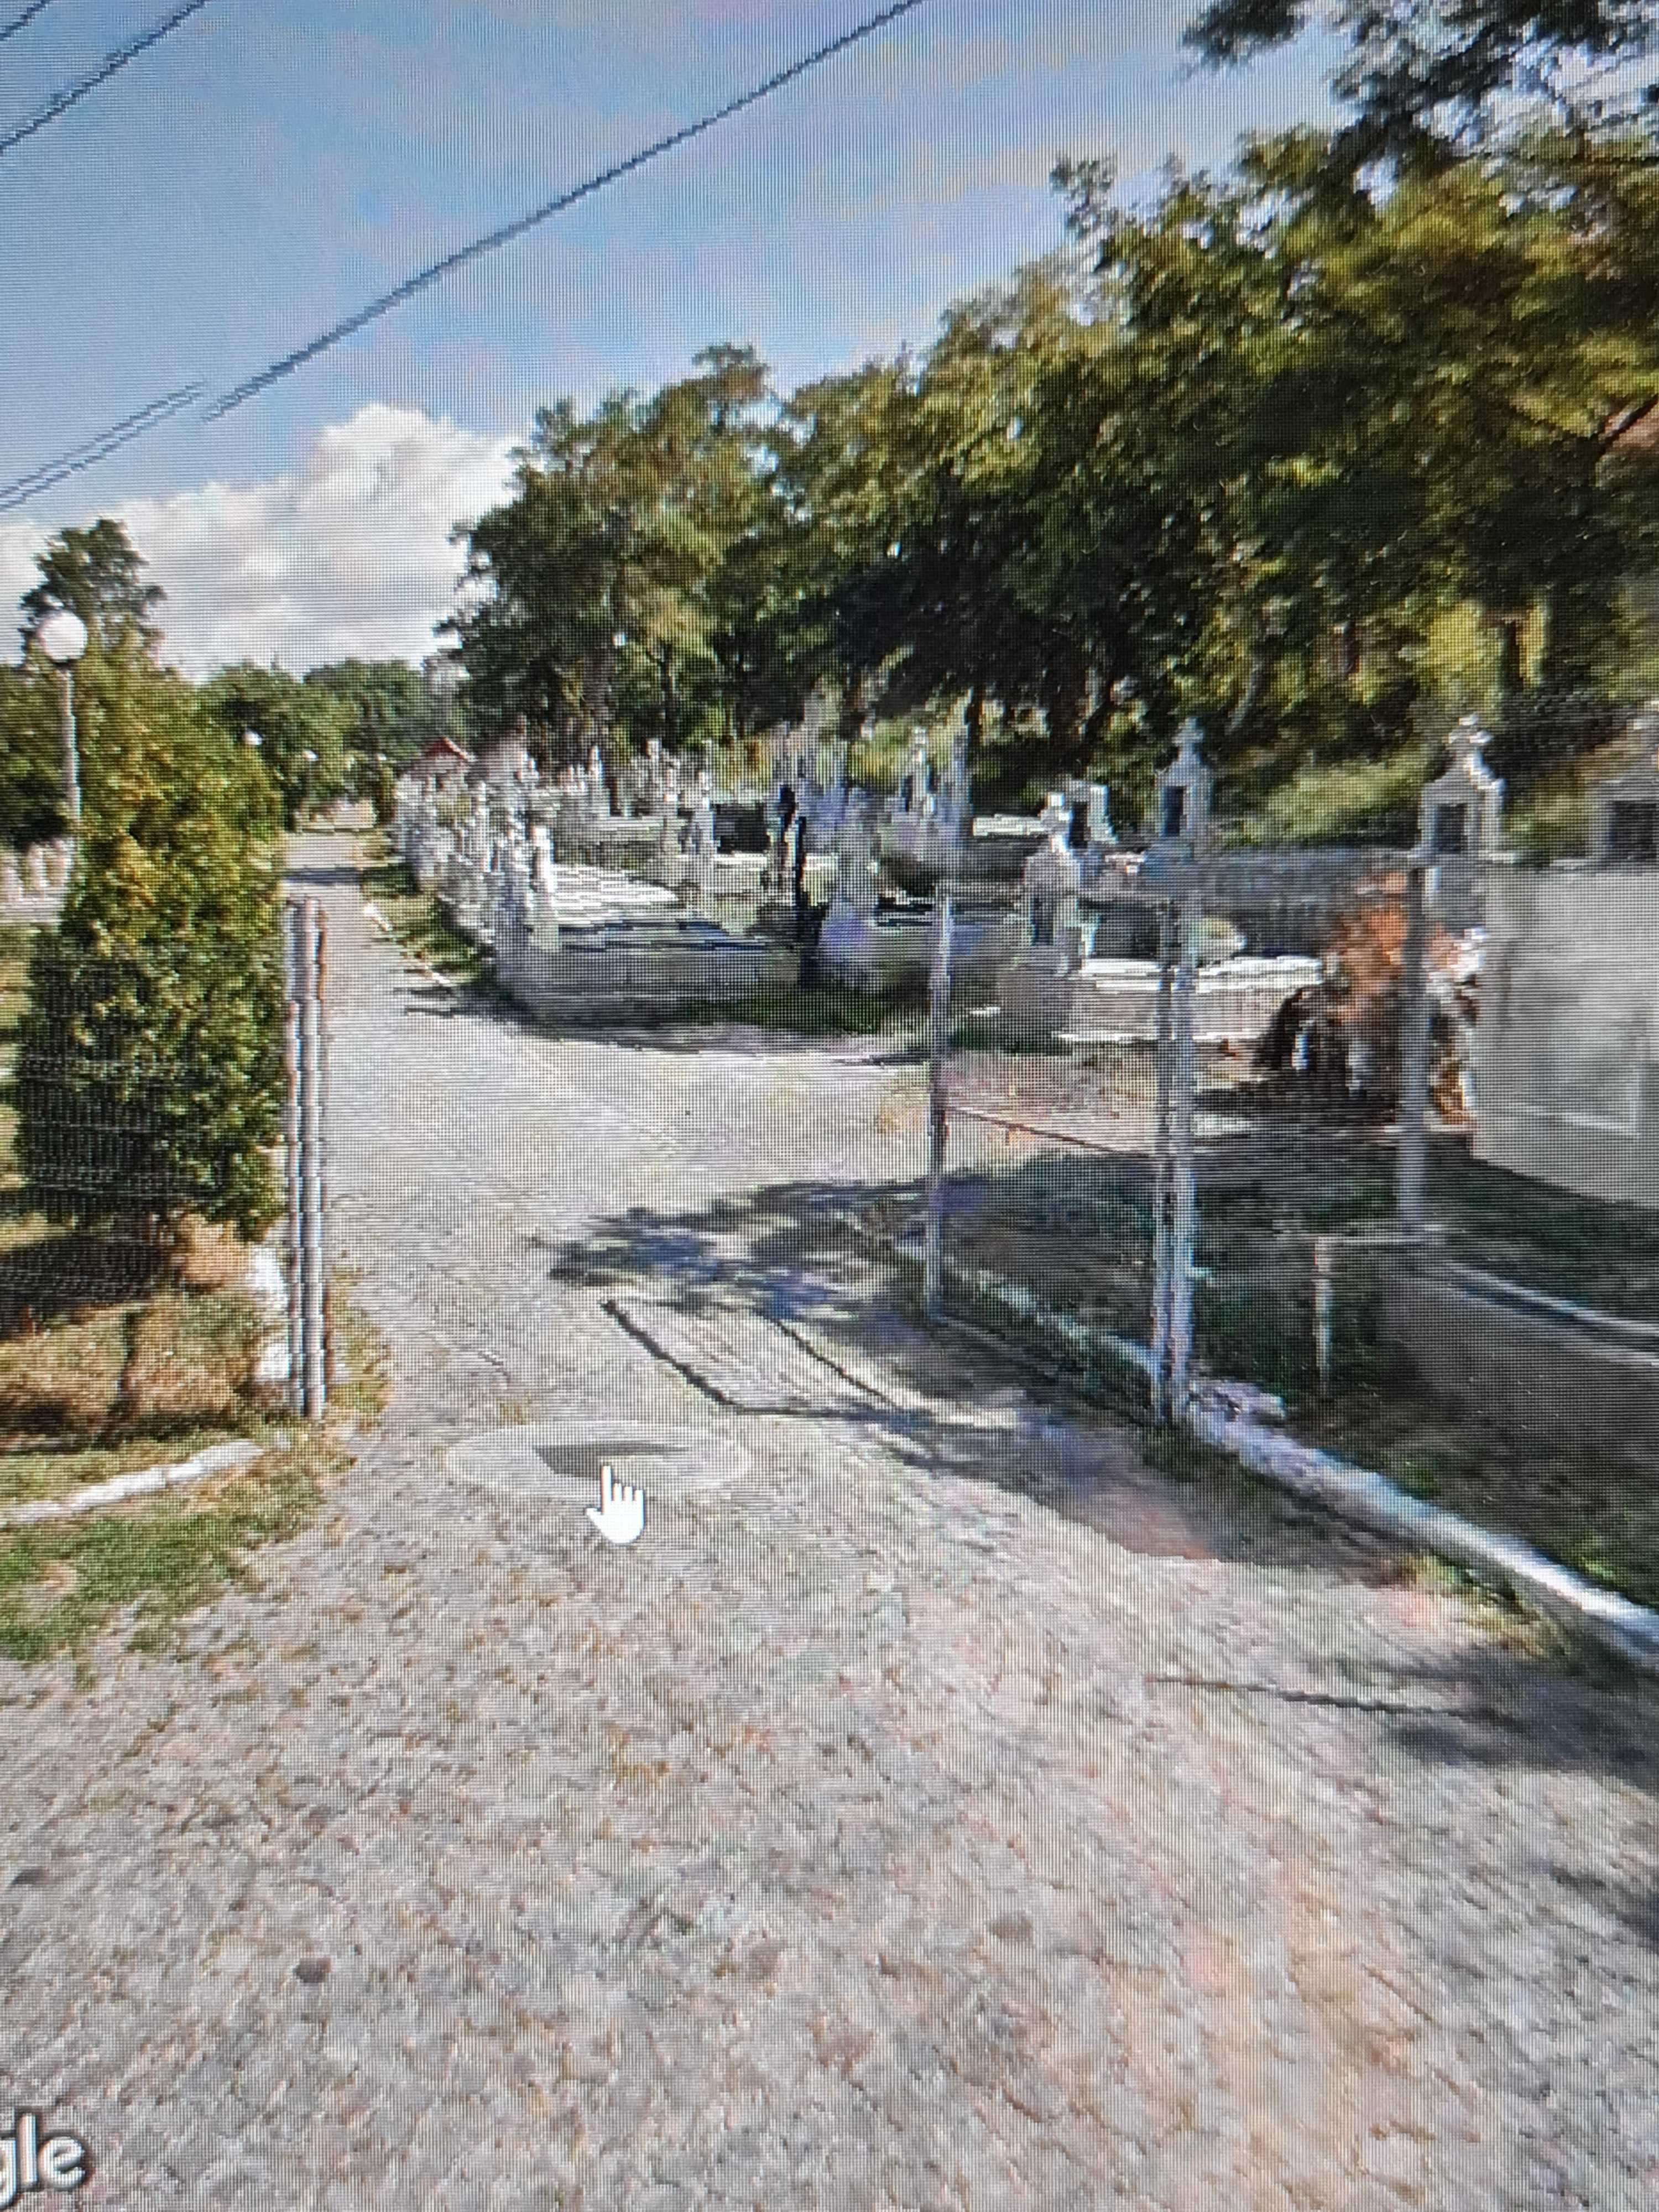 loc de veci in cimitirul/ortodox/ municipal Mures , platoul Cornesti